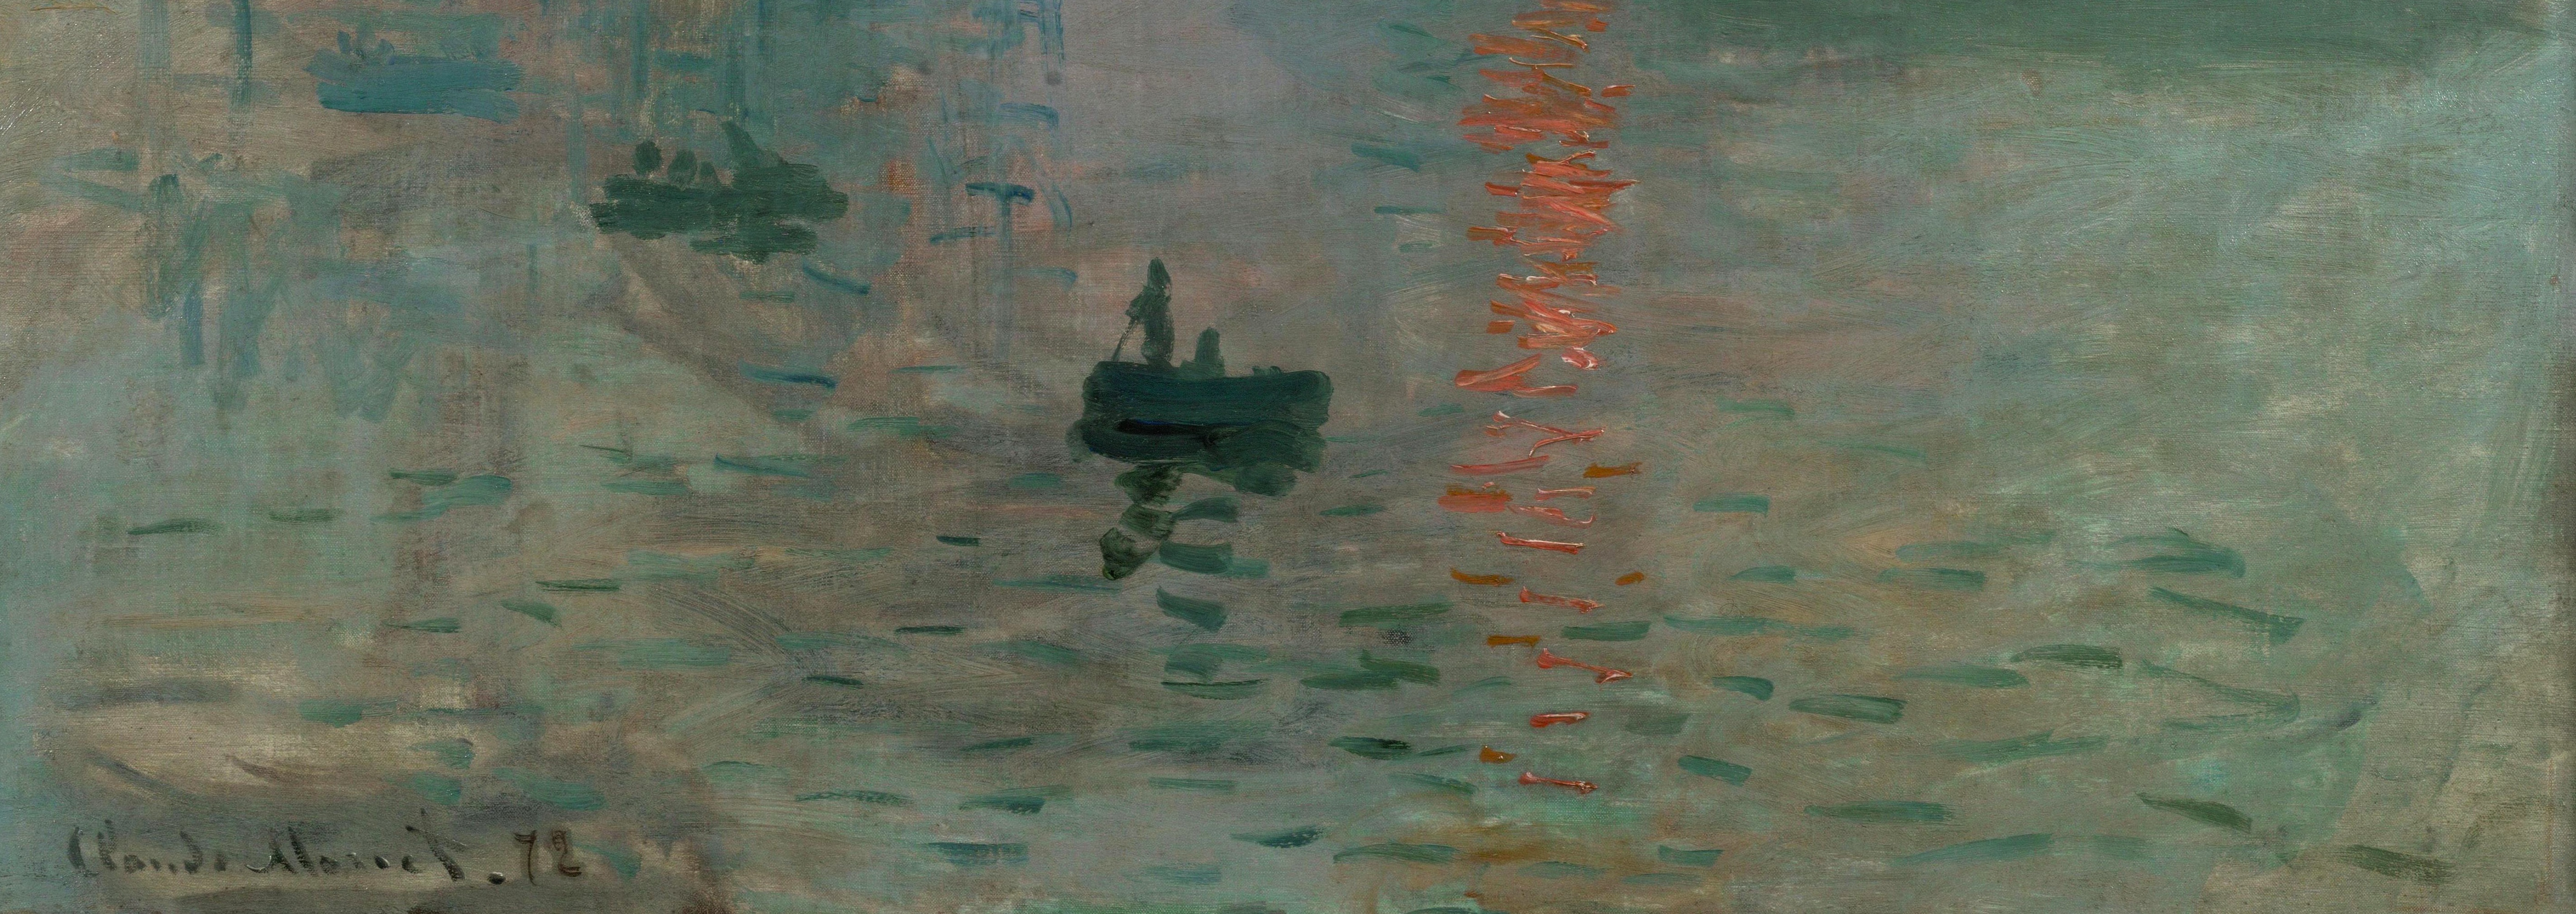 Claude Monet, Impression, Sunrise, - Claude Monet Impression Sunrise 1874 - HD Wallpaper 